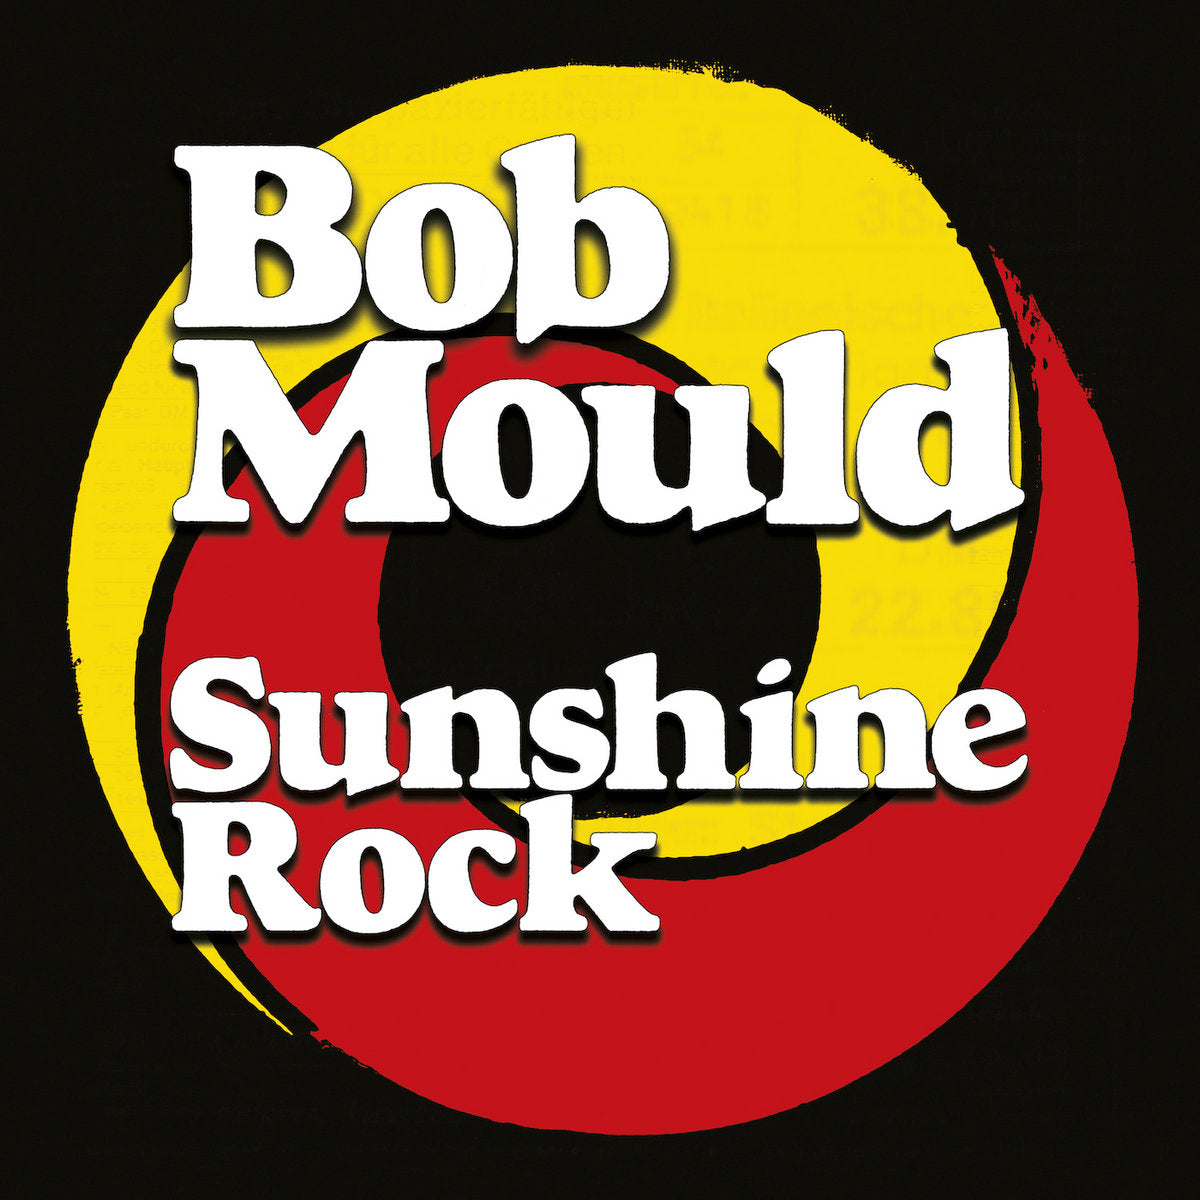 Mould, Bob ‎– Sunshine Rock – New LP